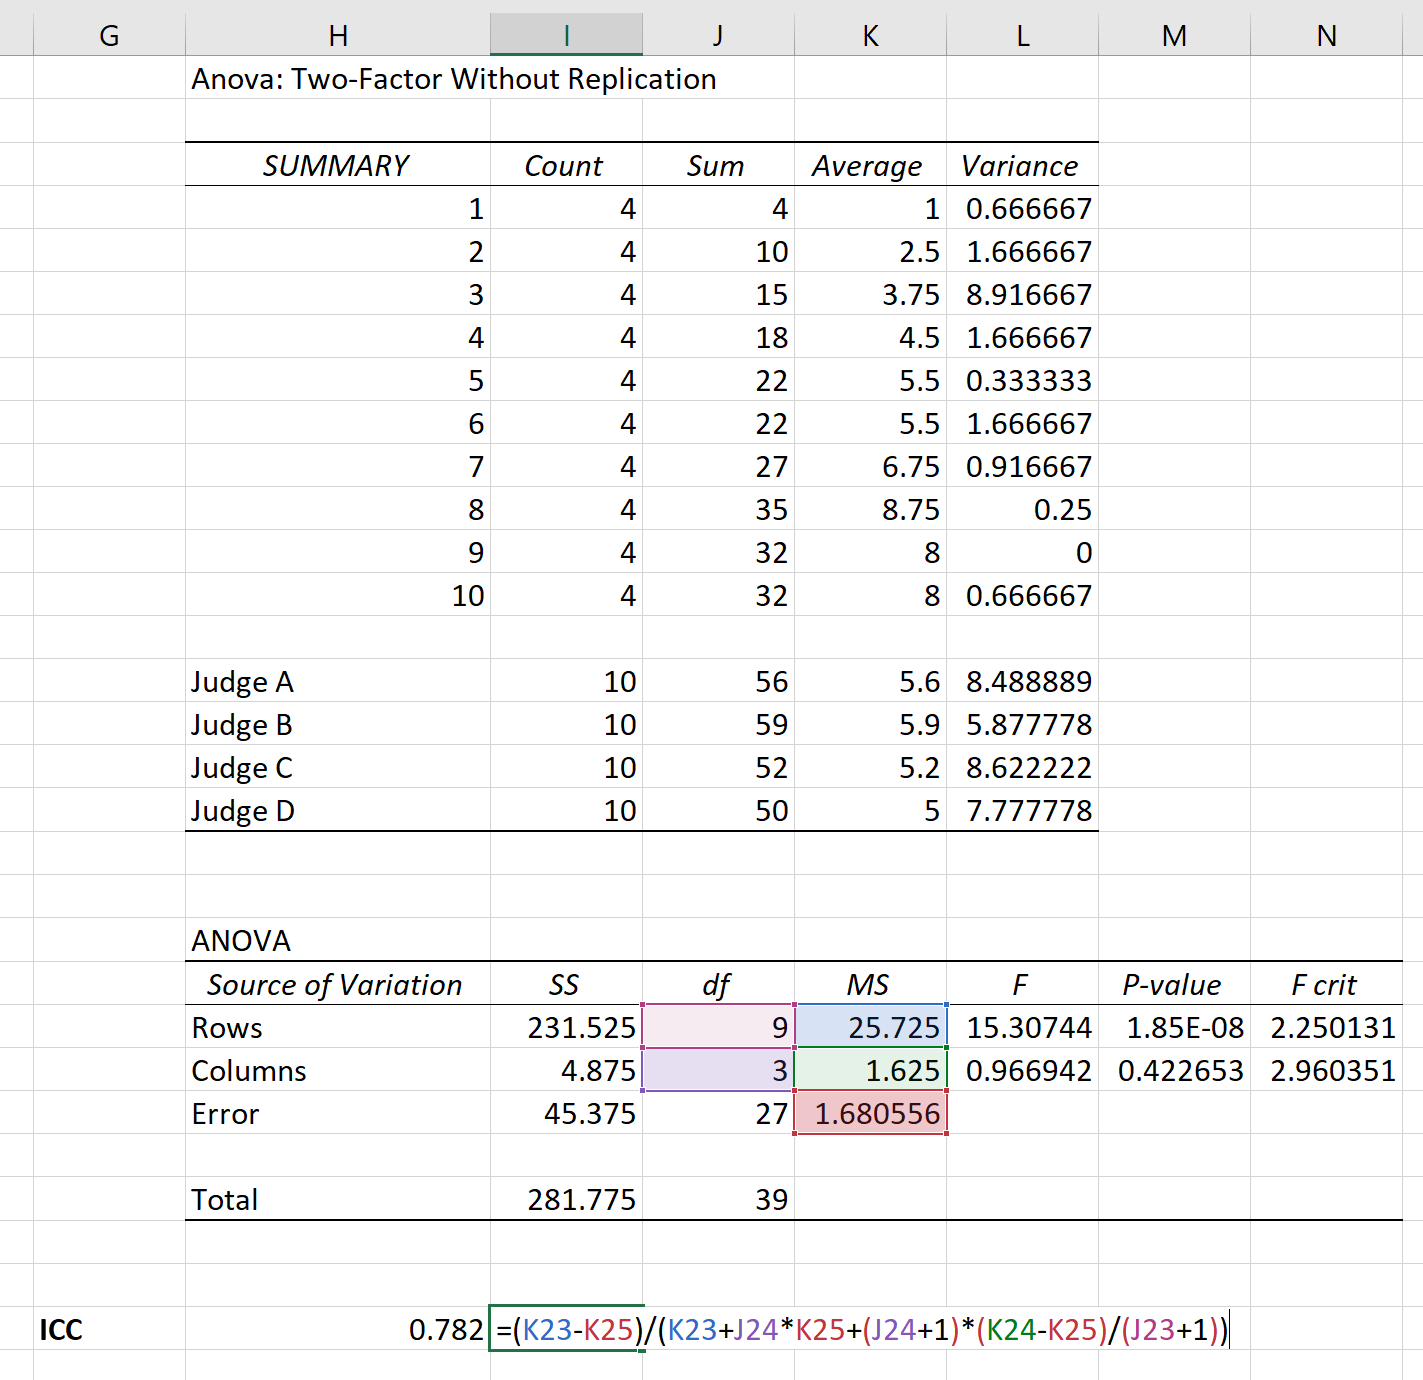 Intraclass correlation coefficient in Excel